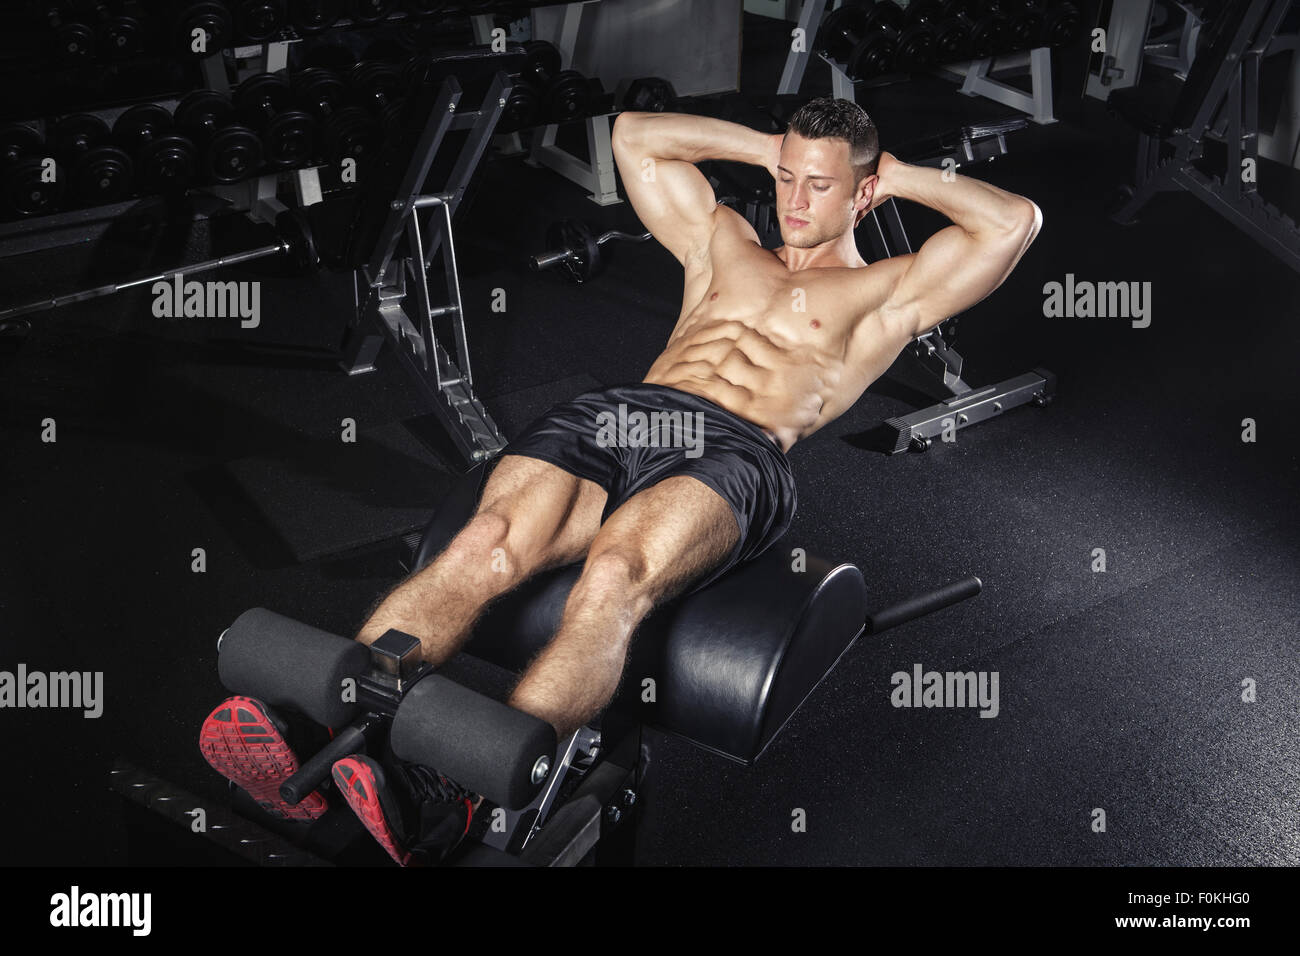 Physical athlete exercising with glute ham developer Stock Photo